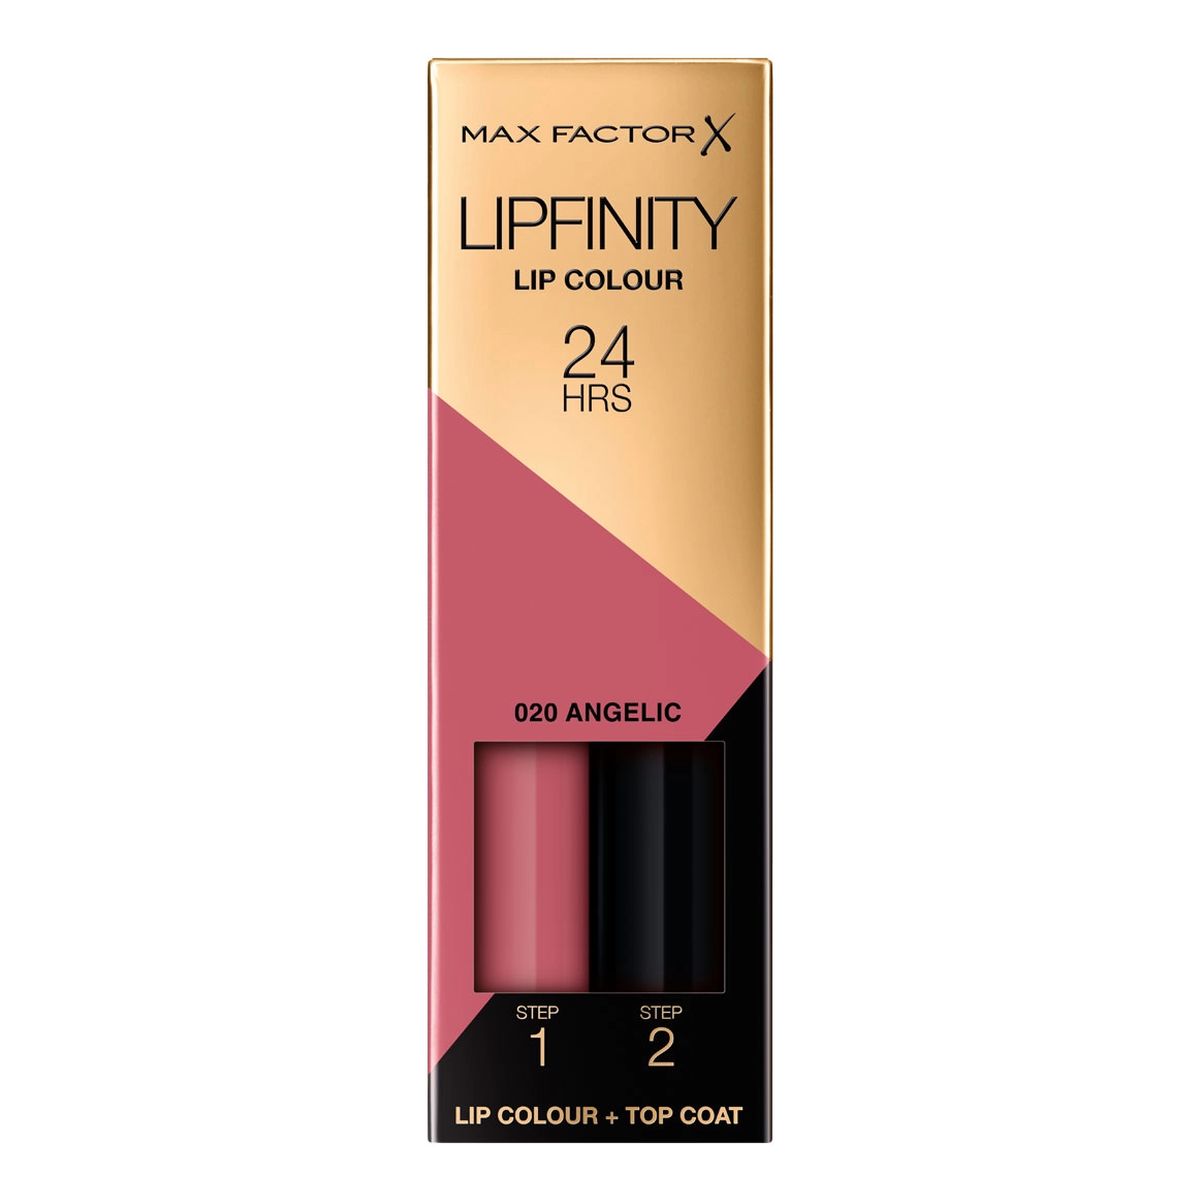 Max Factor Lipfinity Lip Colour pomadka do ust 2,3 ml + Top Coat 1,9g